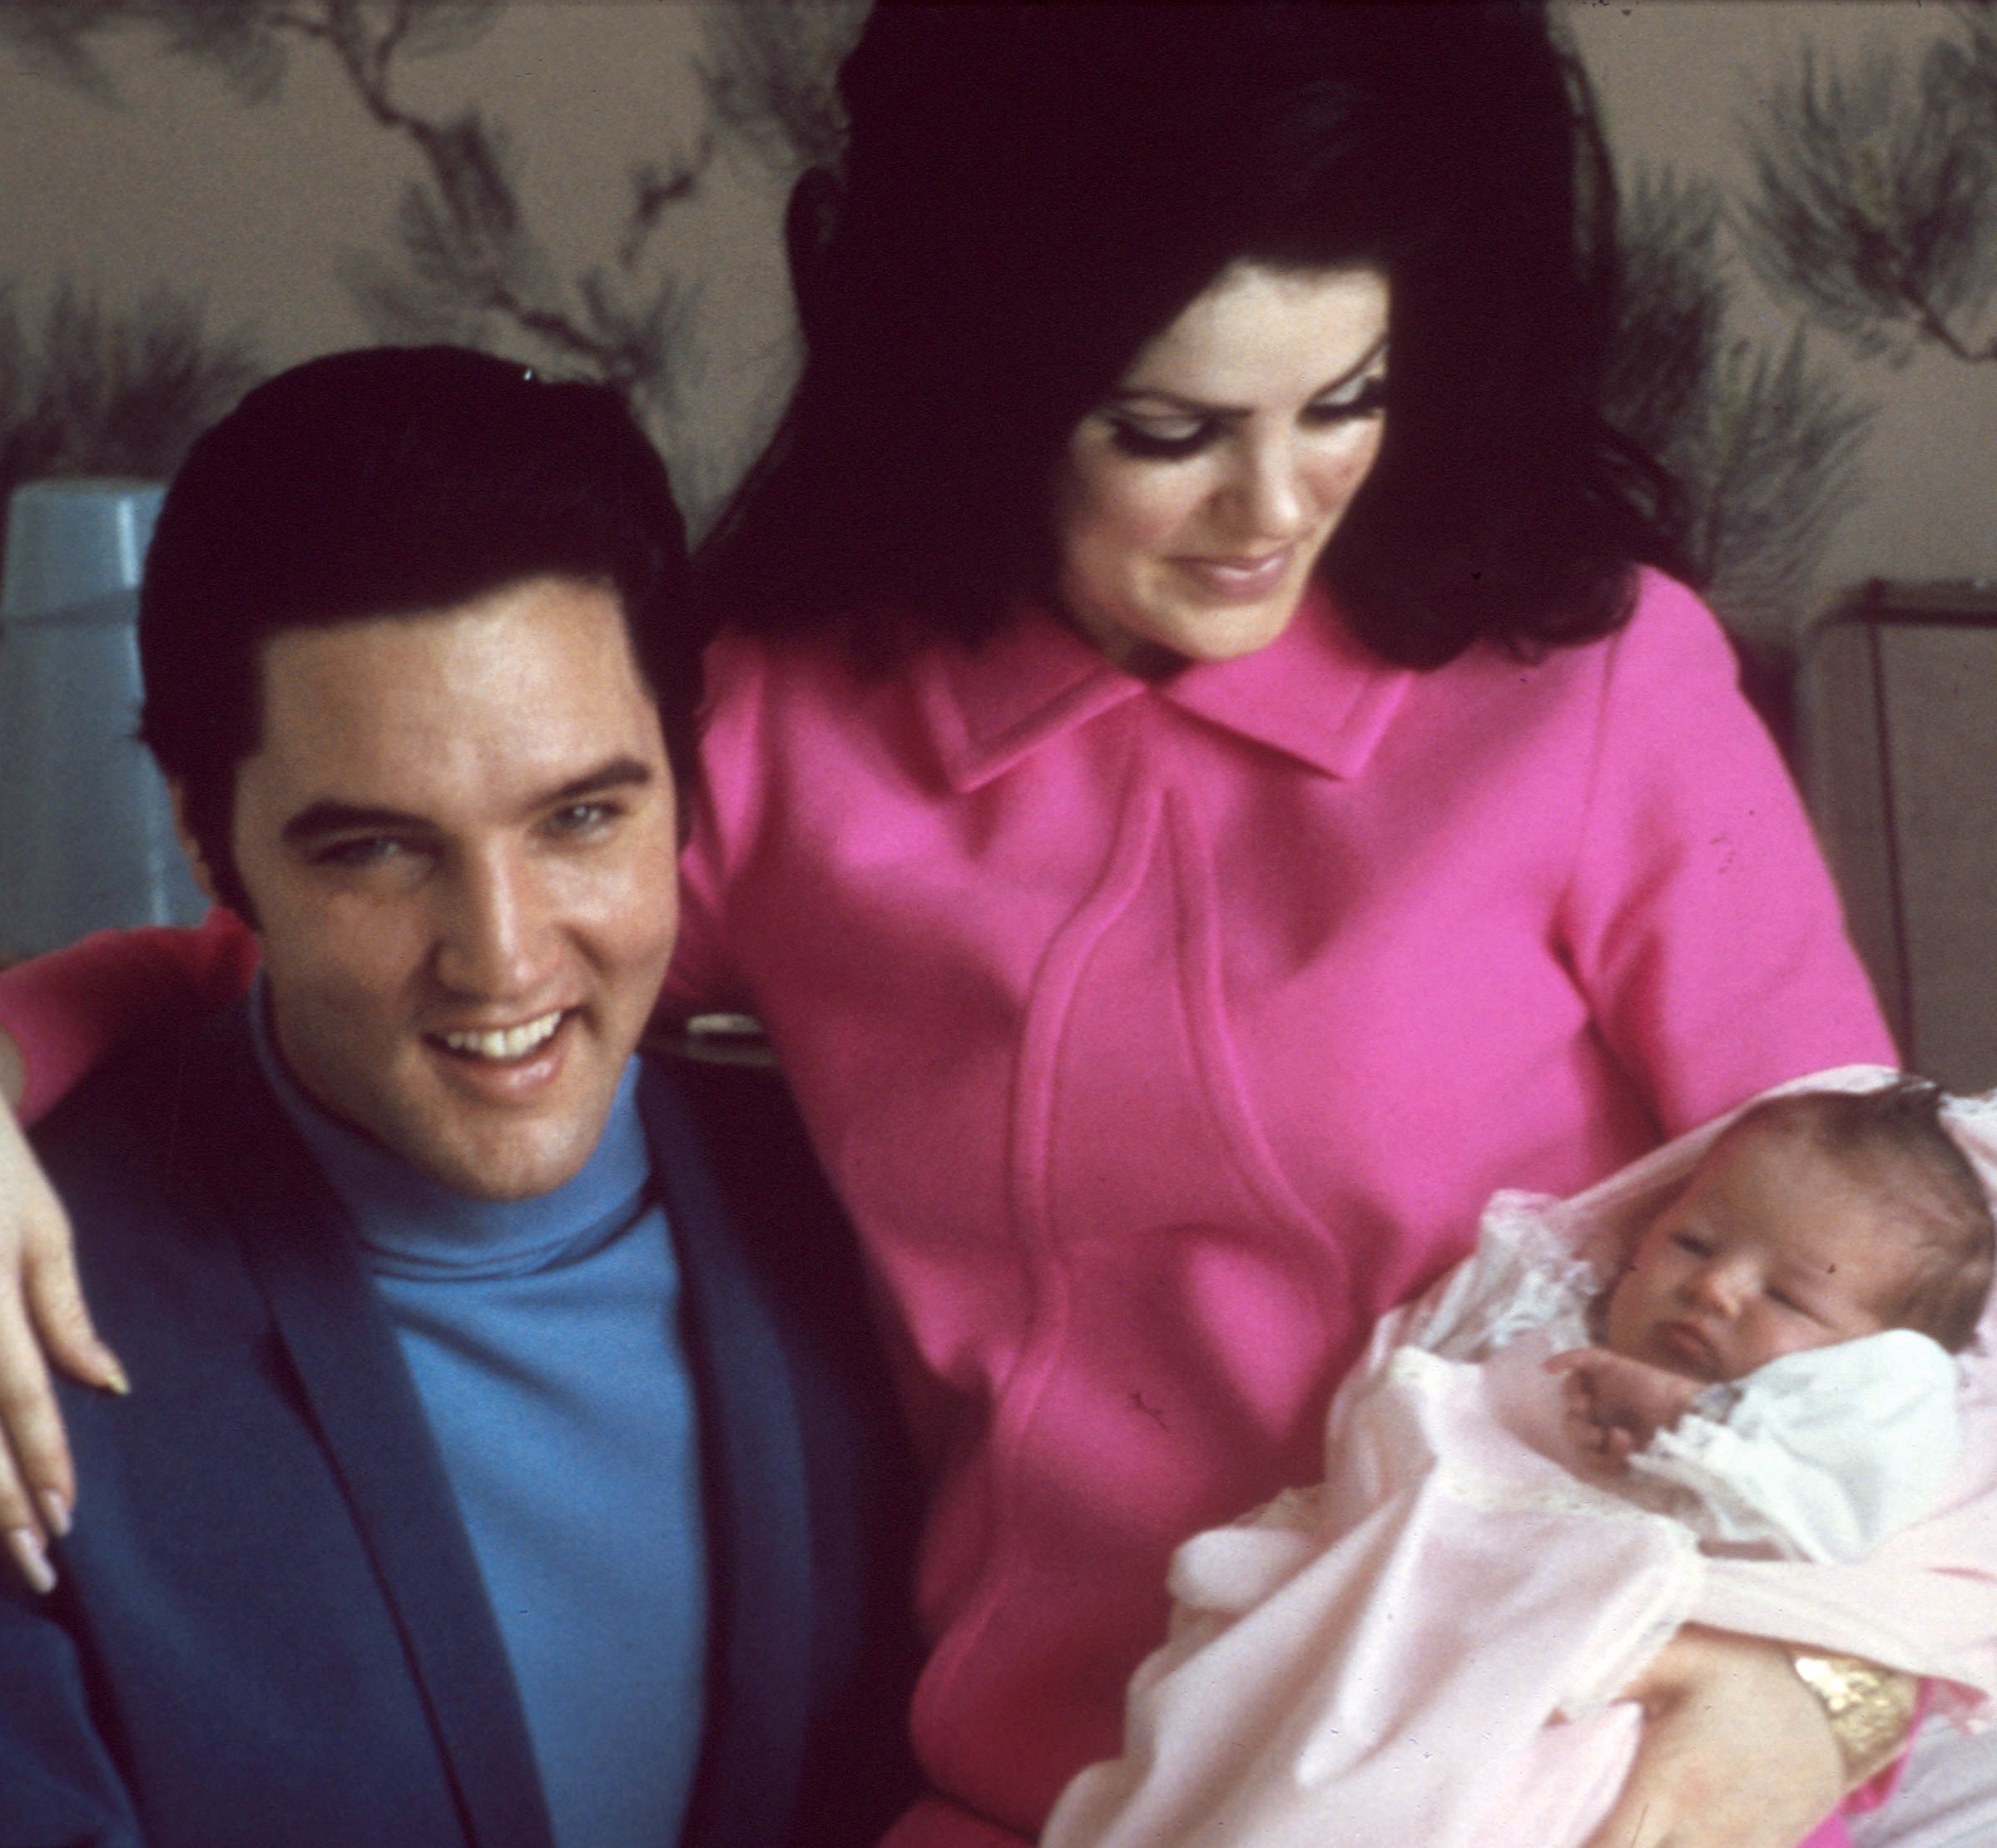 Priscilla Presley putting her arm around Elvis Presley and holding Lisa Marie Presley